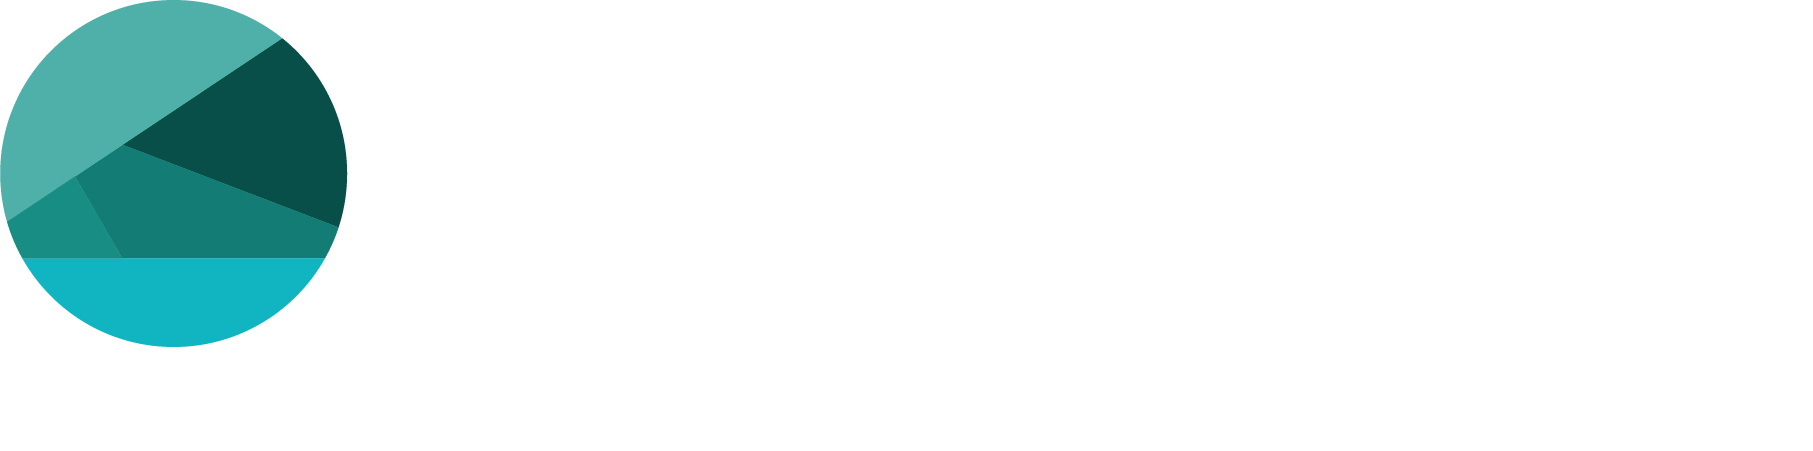 Cellupal logo